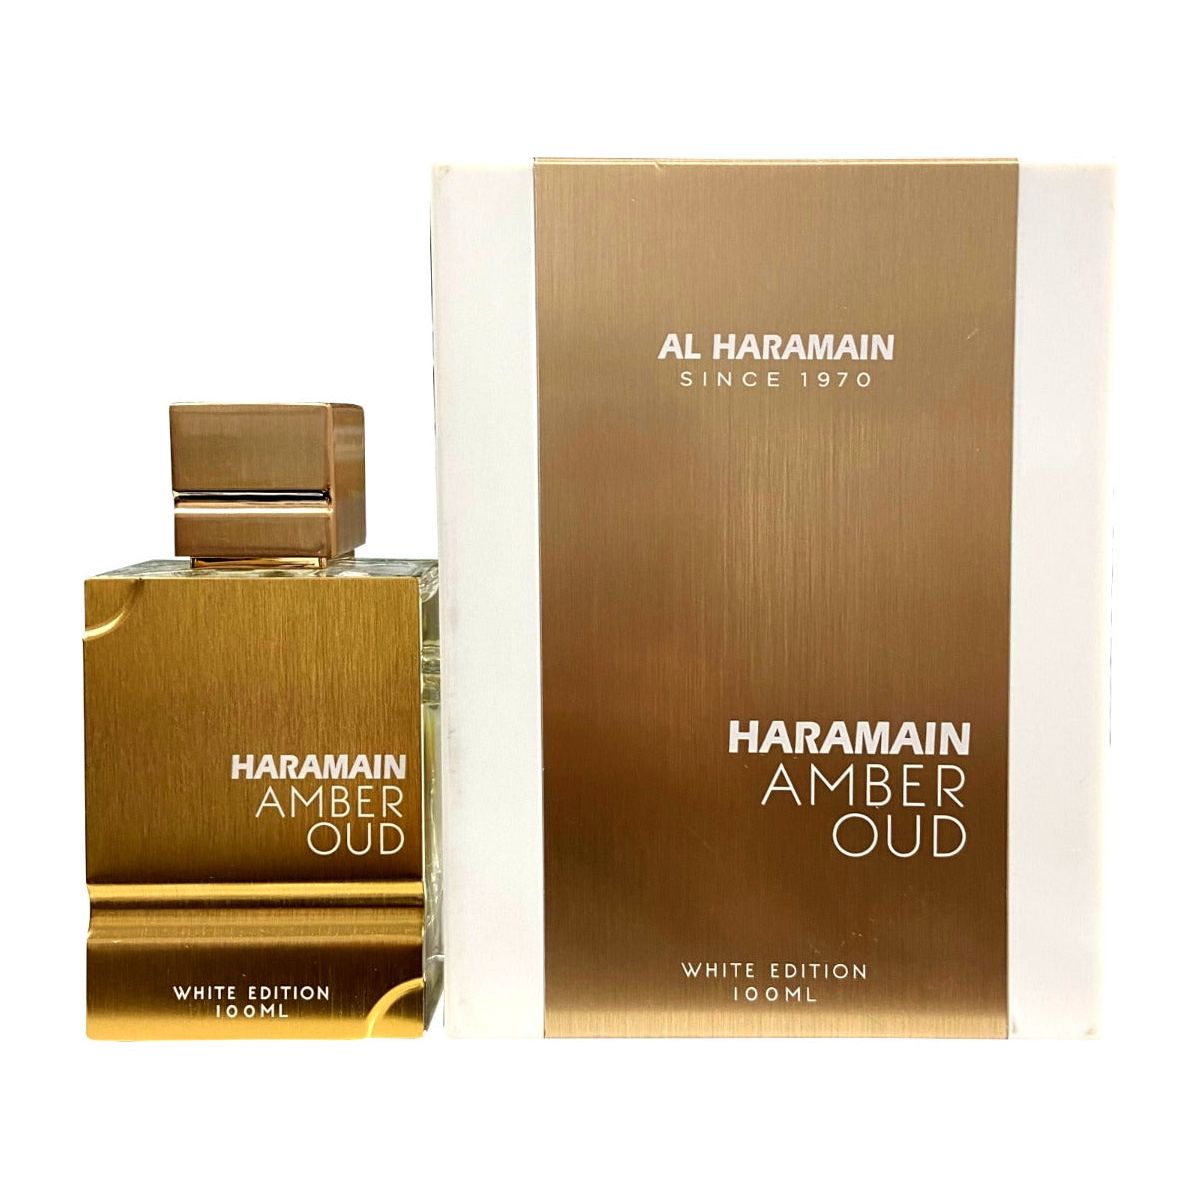 Haramain Amber Oud White Edition by Al Haramain Eau de Parfum 3.4 oz Spray Unisex